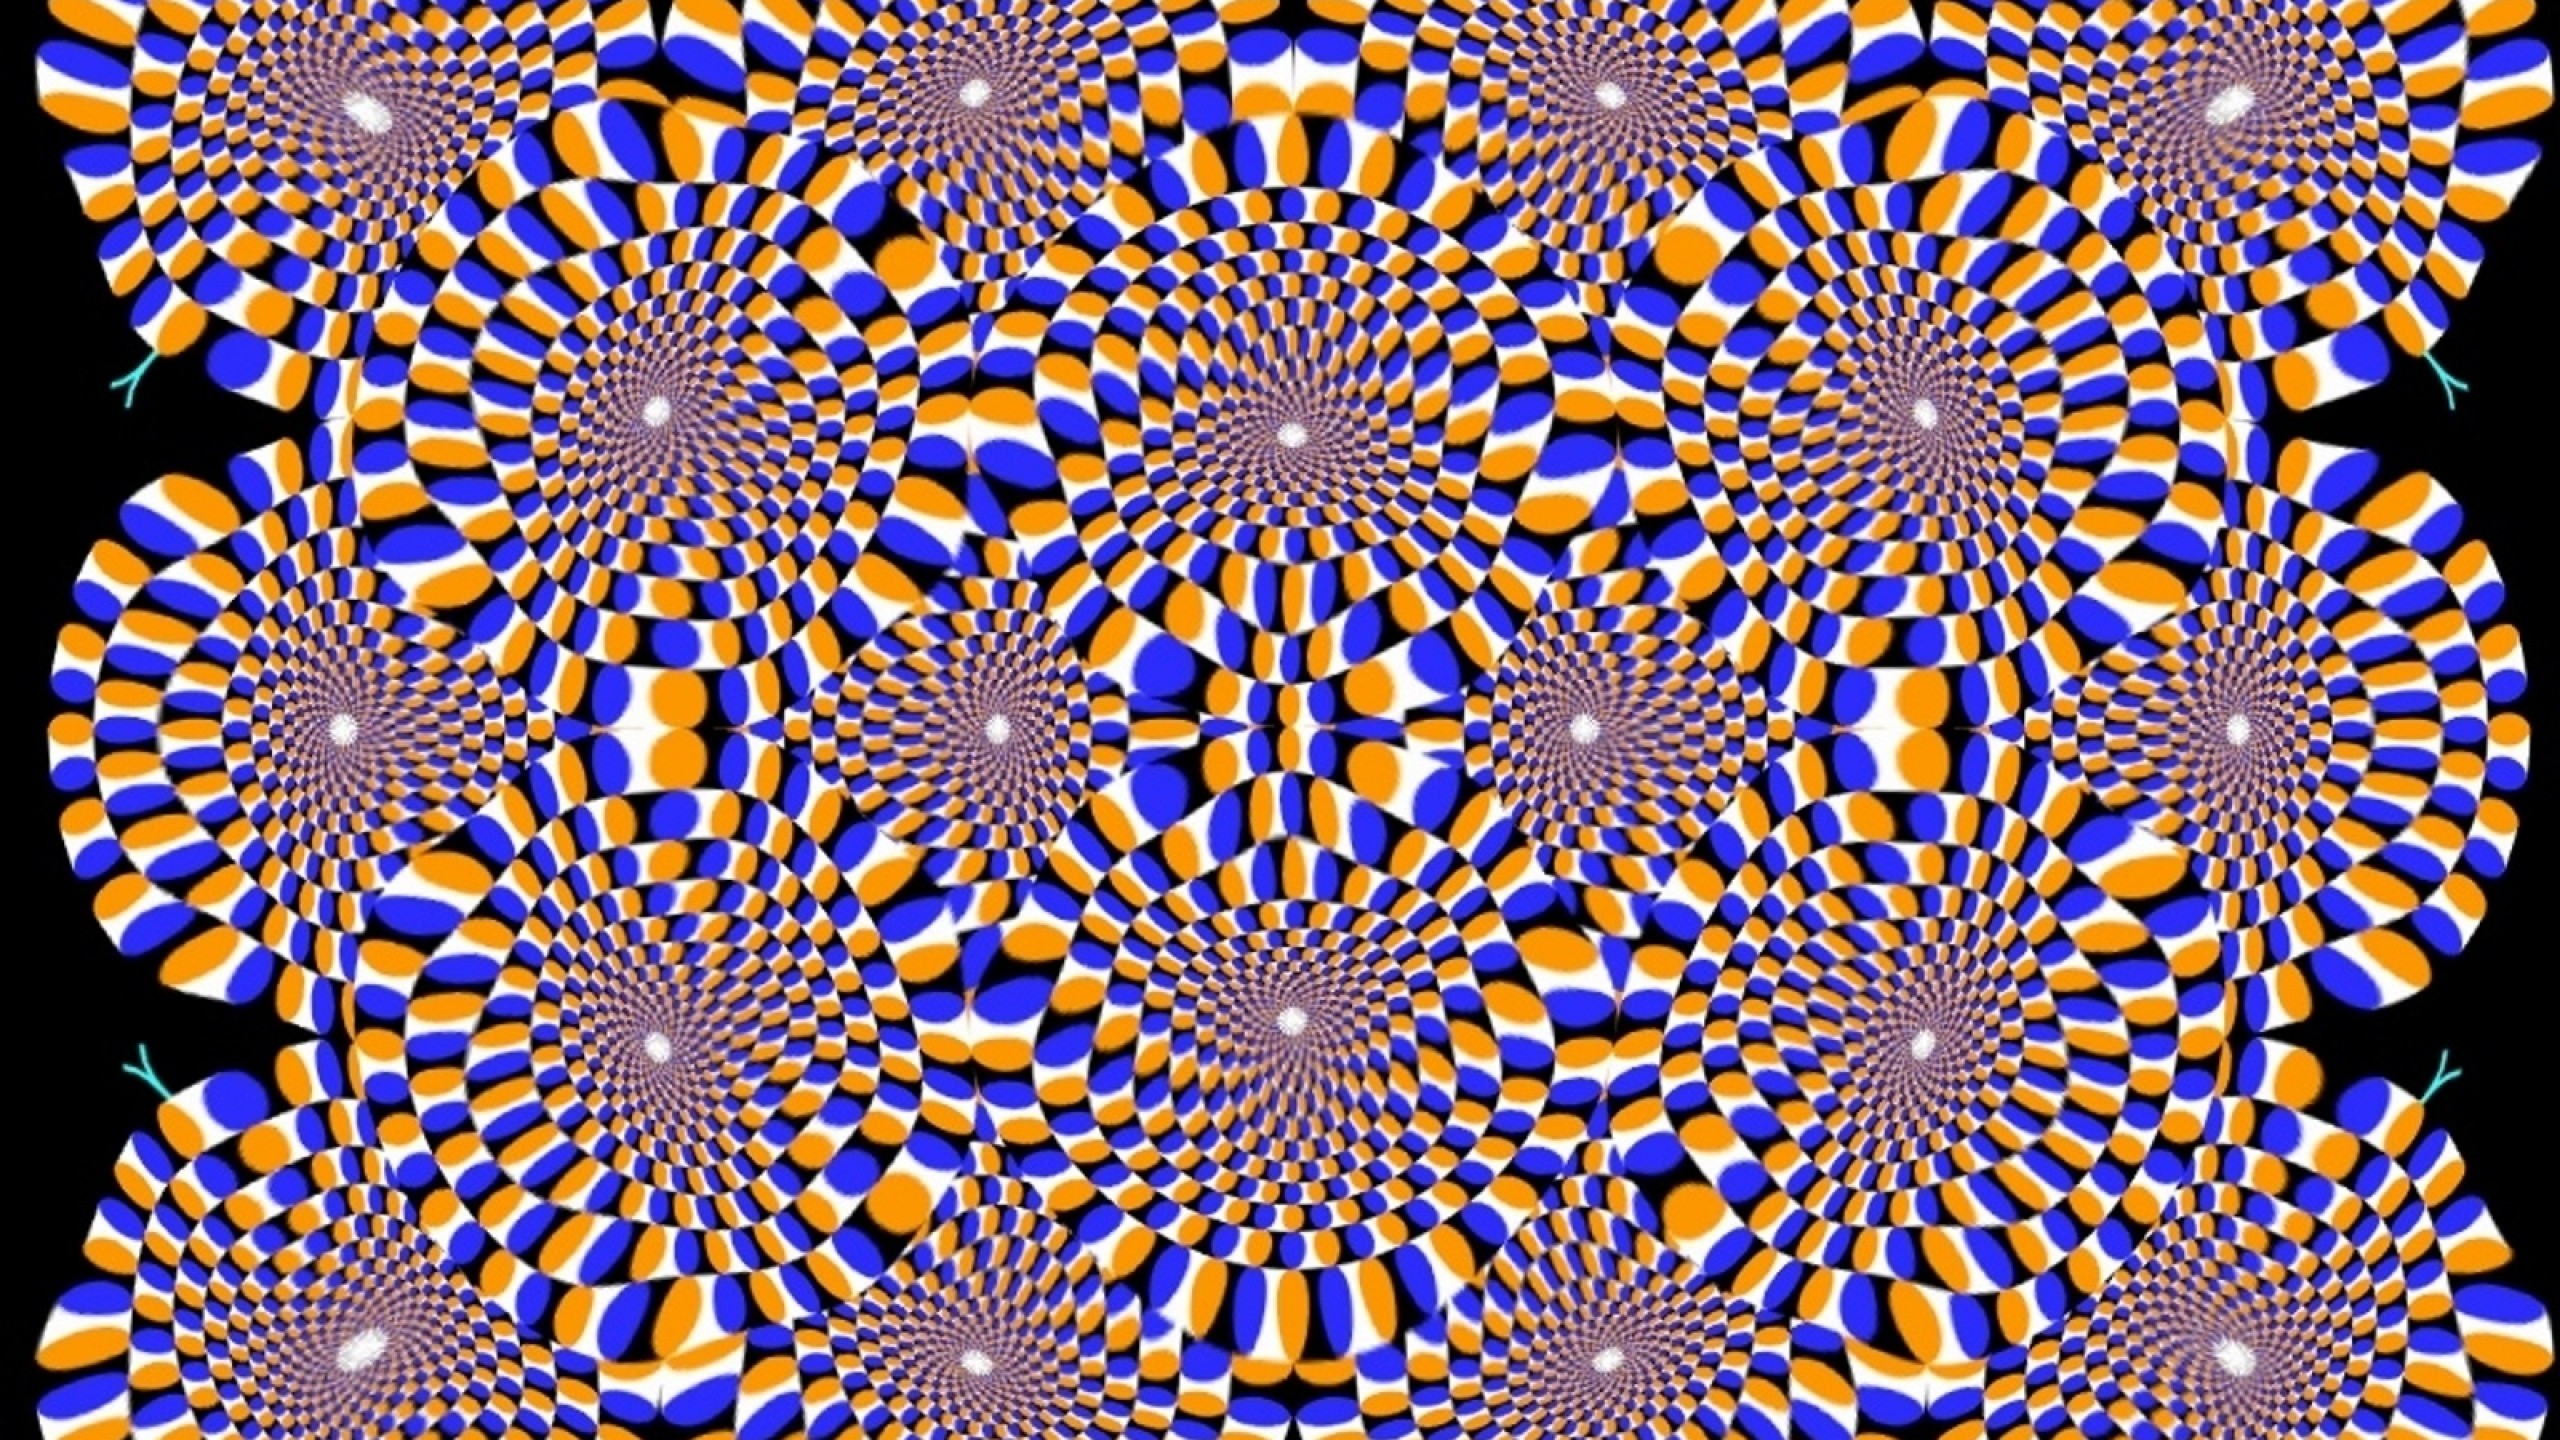 optical illusion wallpaper hd,pattern,textile,symmetry,design,pattern